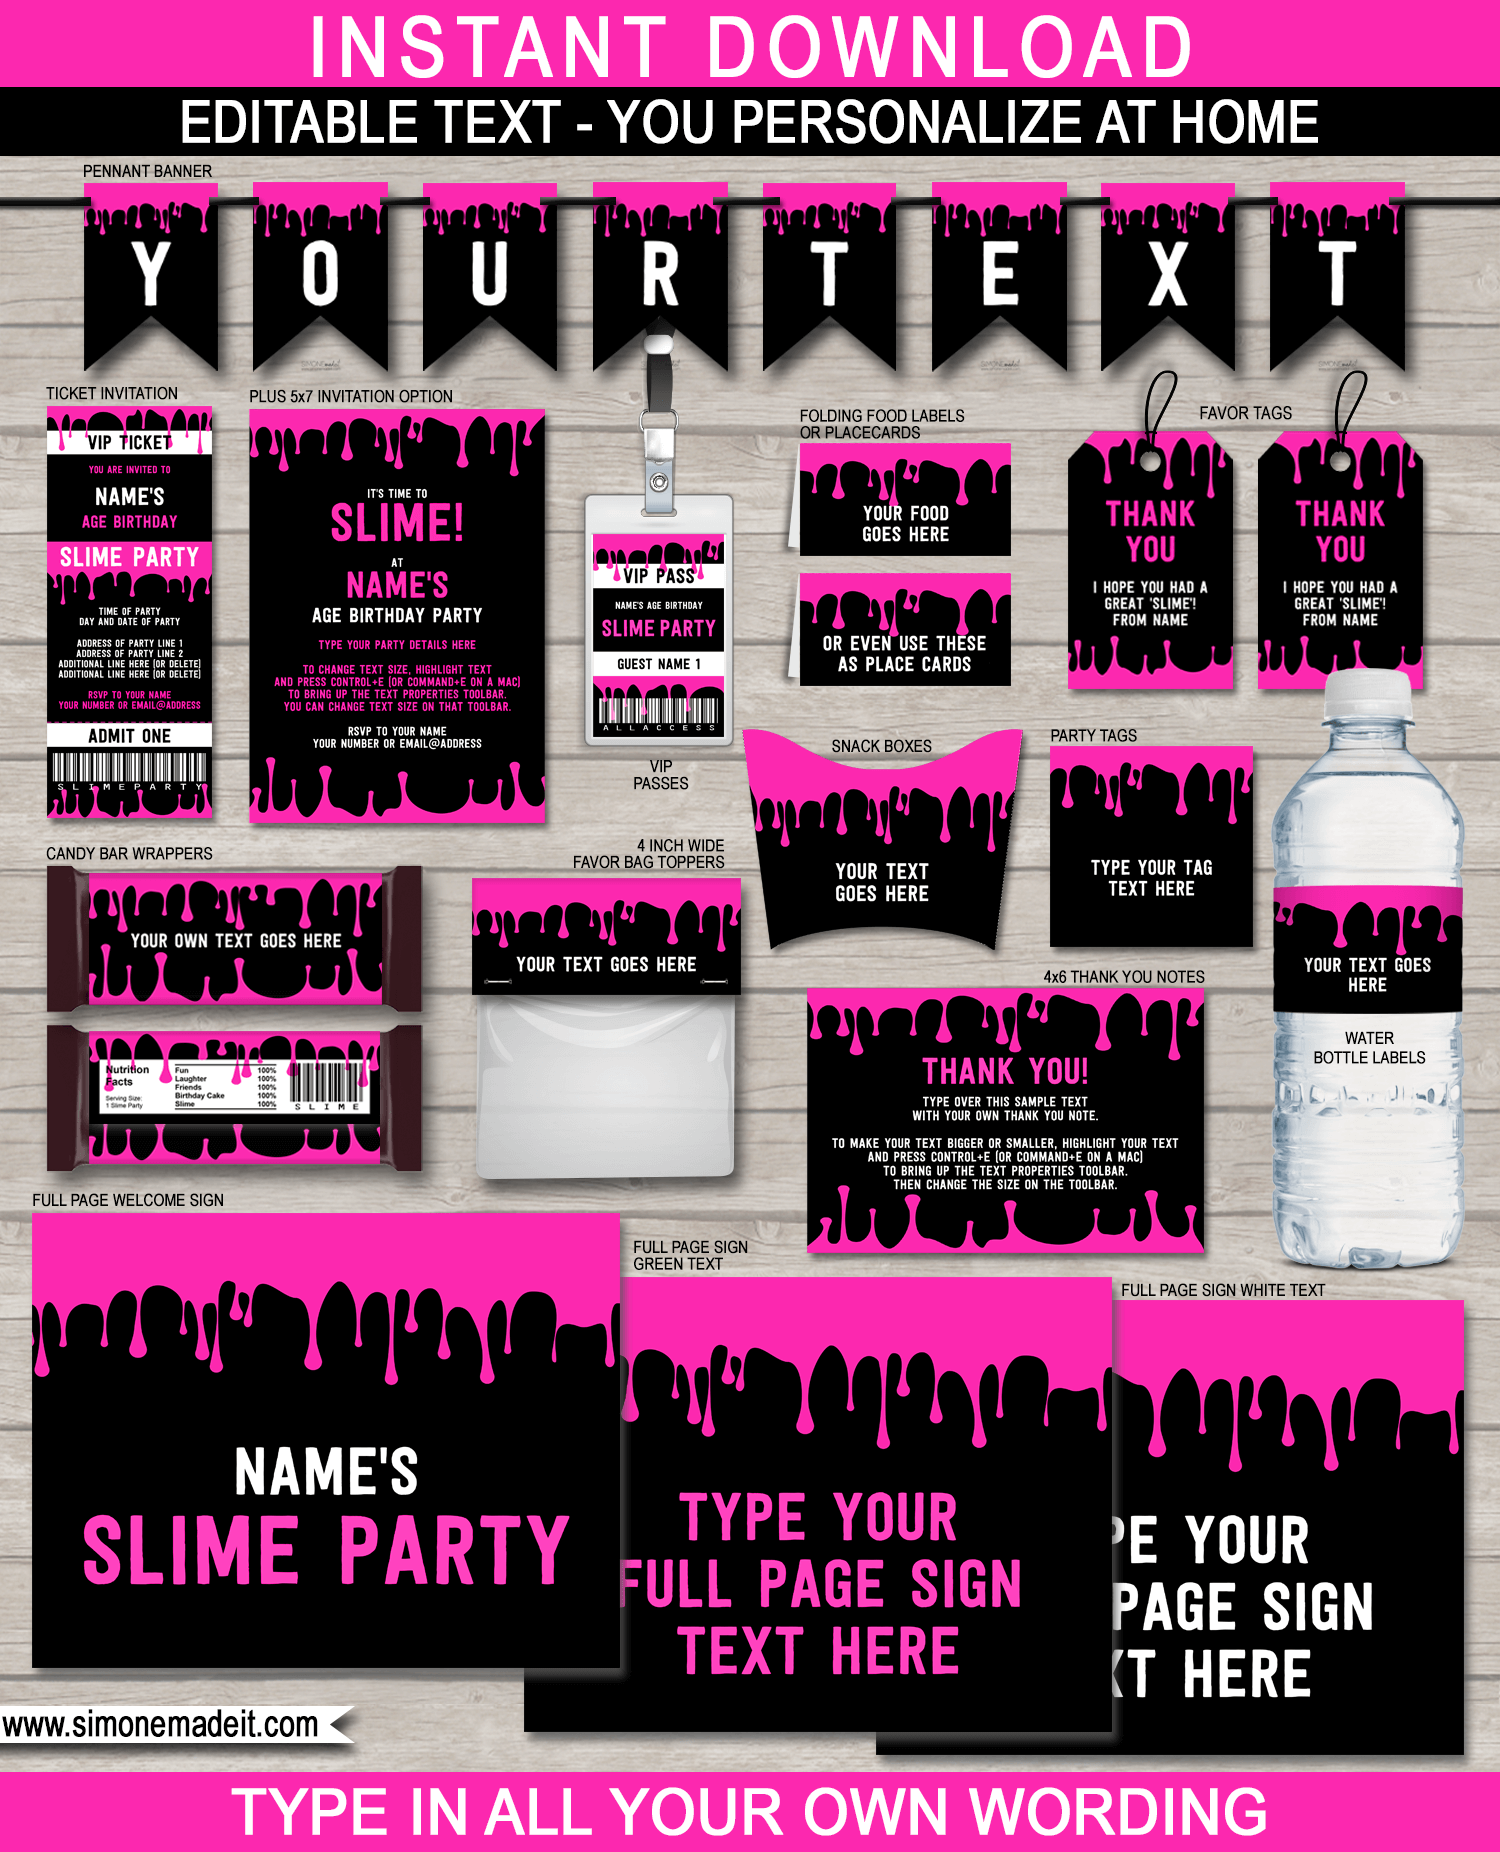 Slime Birthday Party Printables, Invitations & Decorations - Pink Slime Theme Party - Editable & Printable DIY templates - INSTANT DOWNLOAD via simonemadeit.com